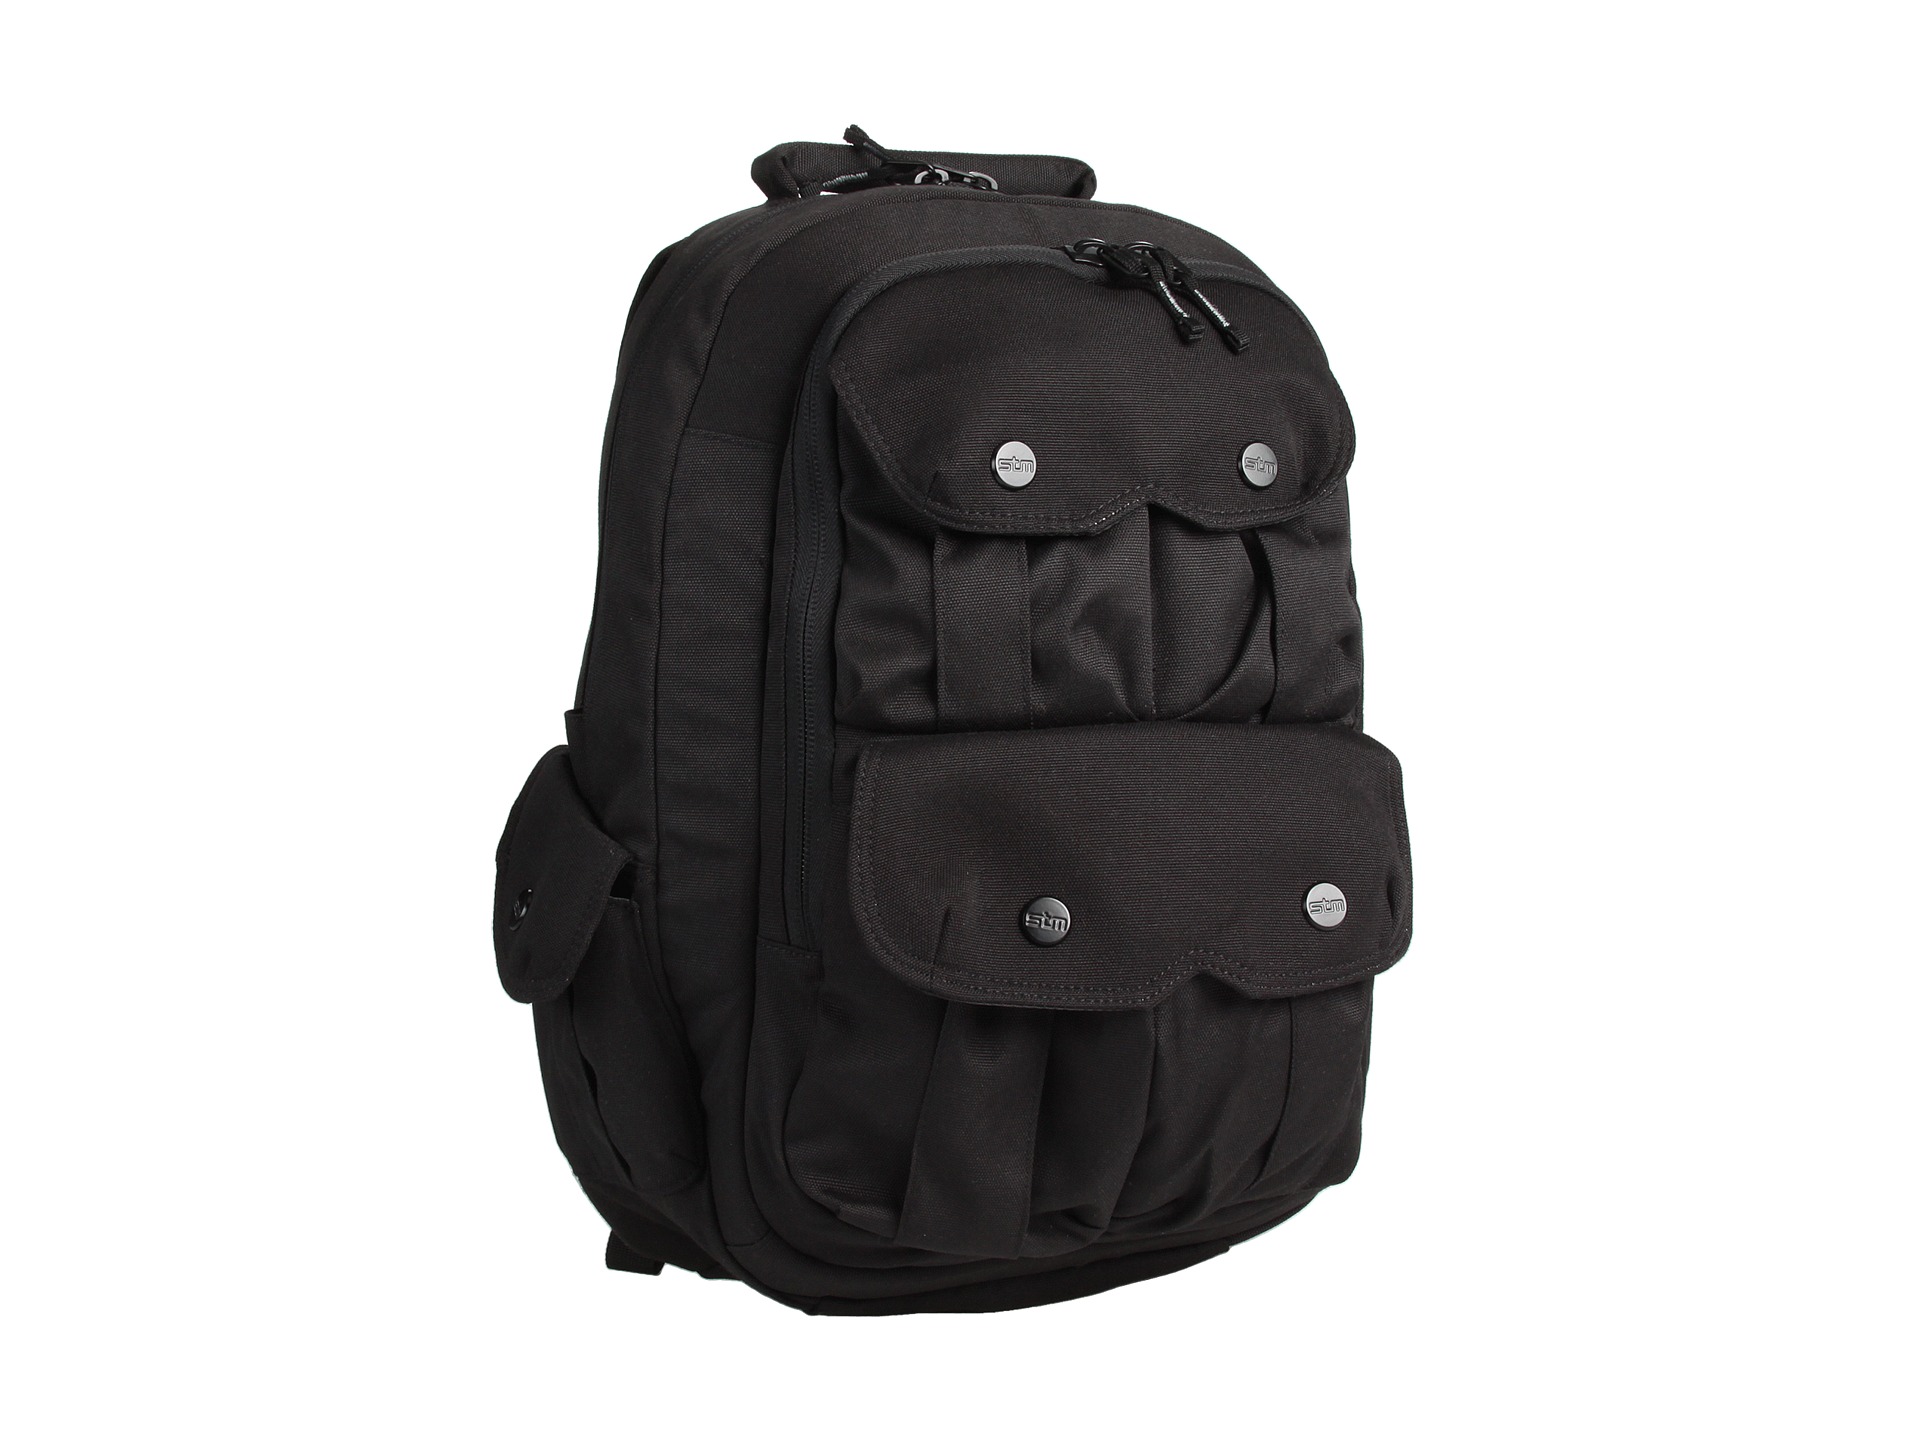 Stm Bags Convoy Medium Laptop Backpack